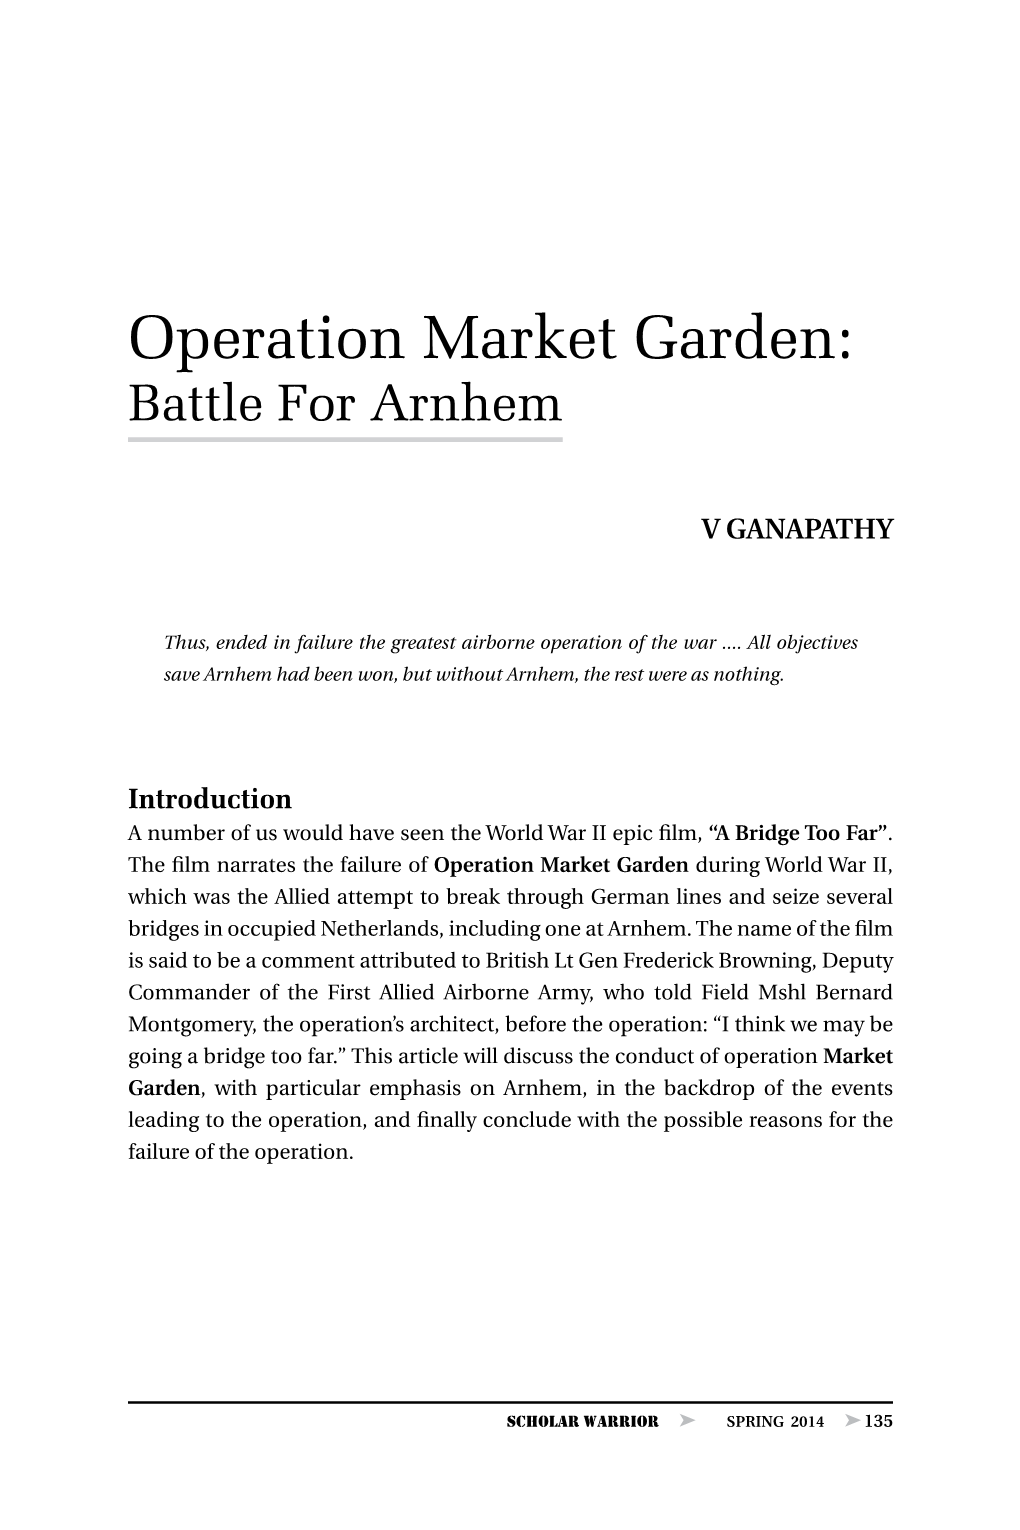 Operation Market Garden: Battle of Arnhem, by Ganapathy